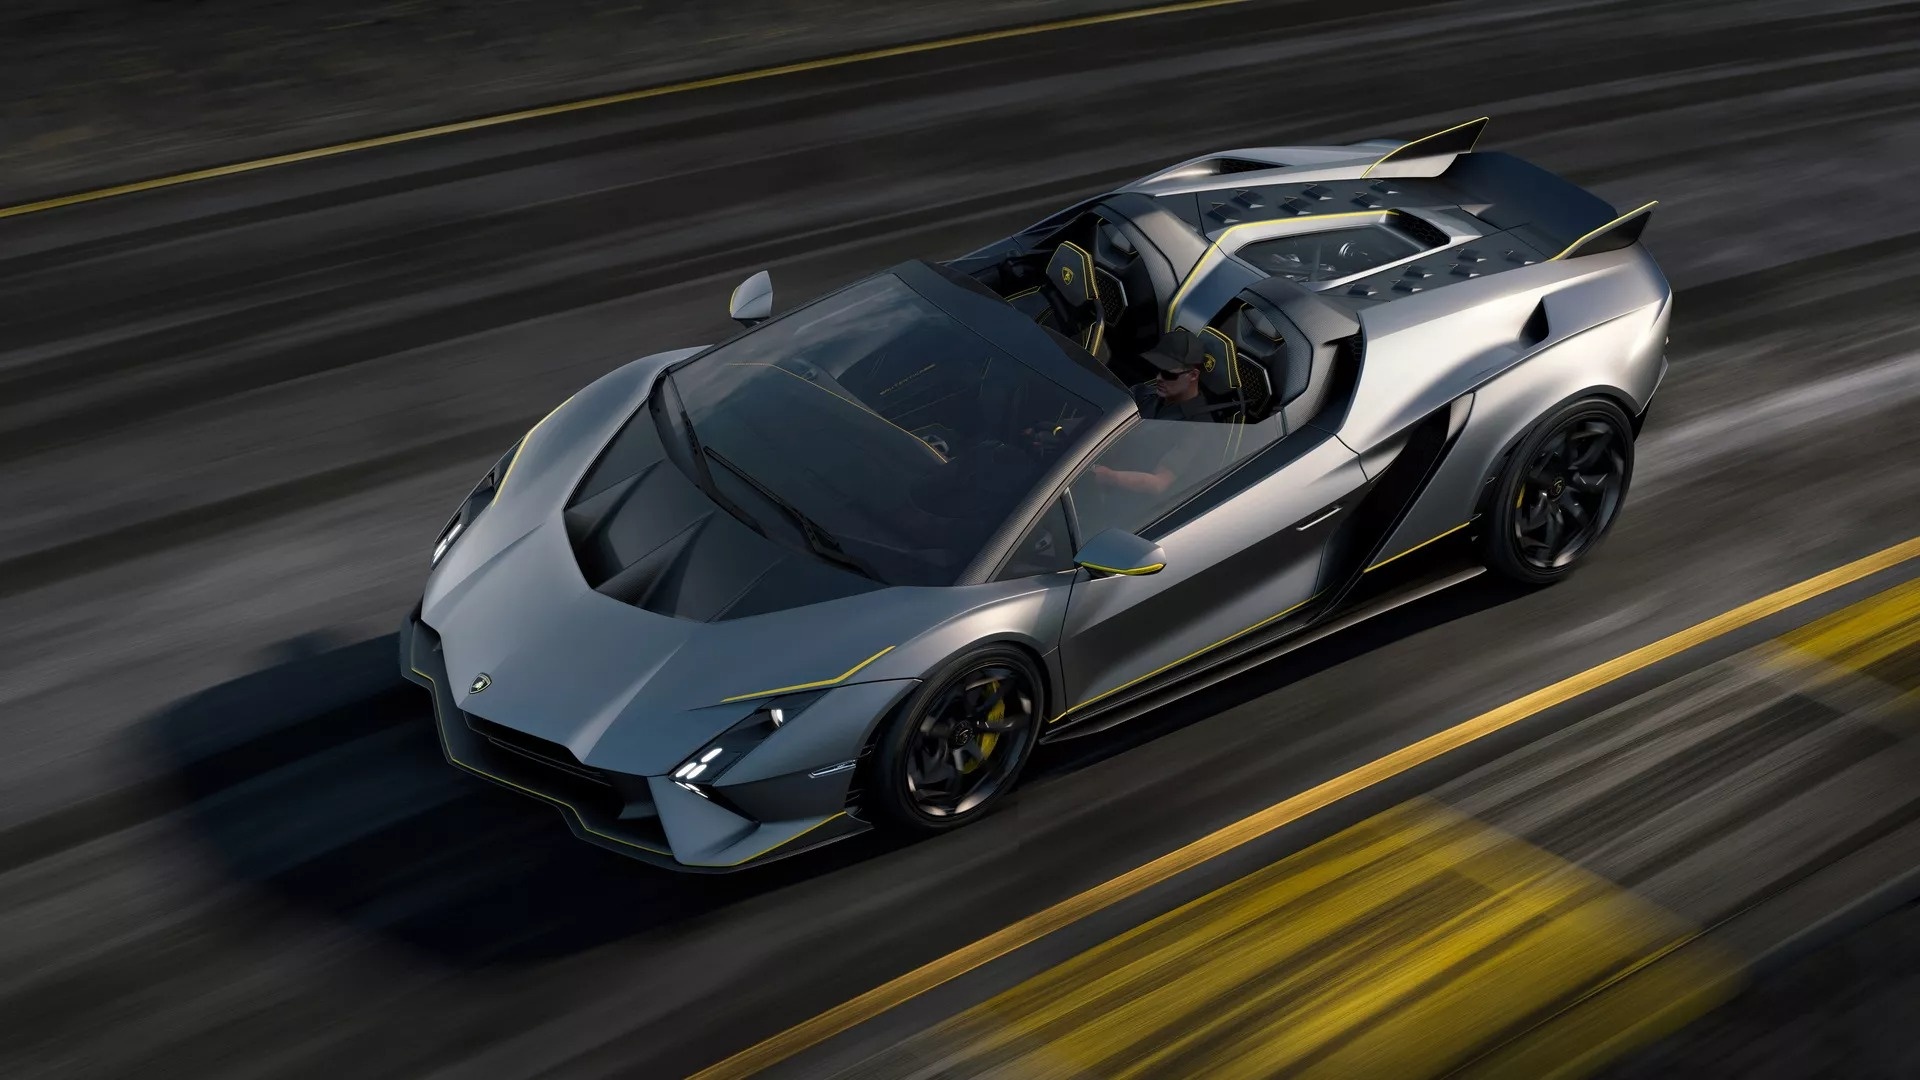 Chi tiết siêu xe Lamborghini Invencible và Autentica vừa ra mắt - ảnh 4